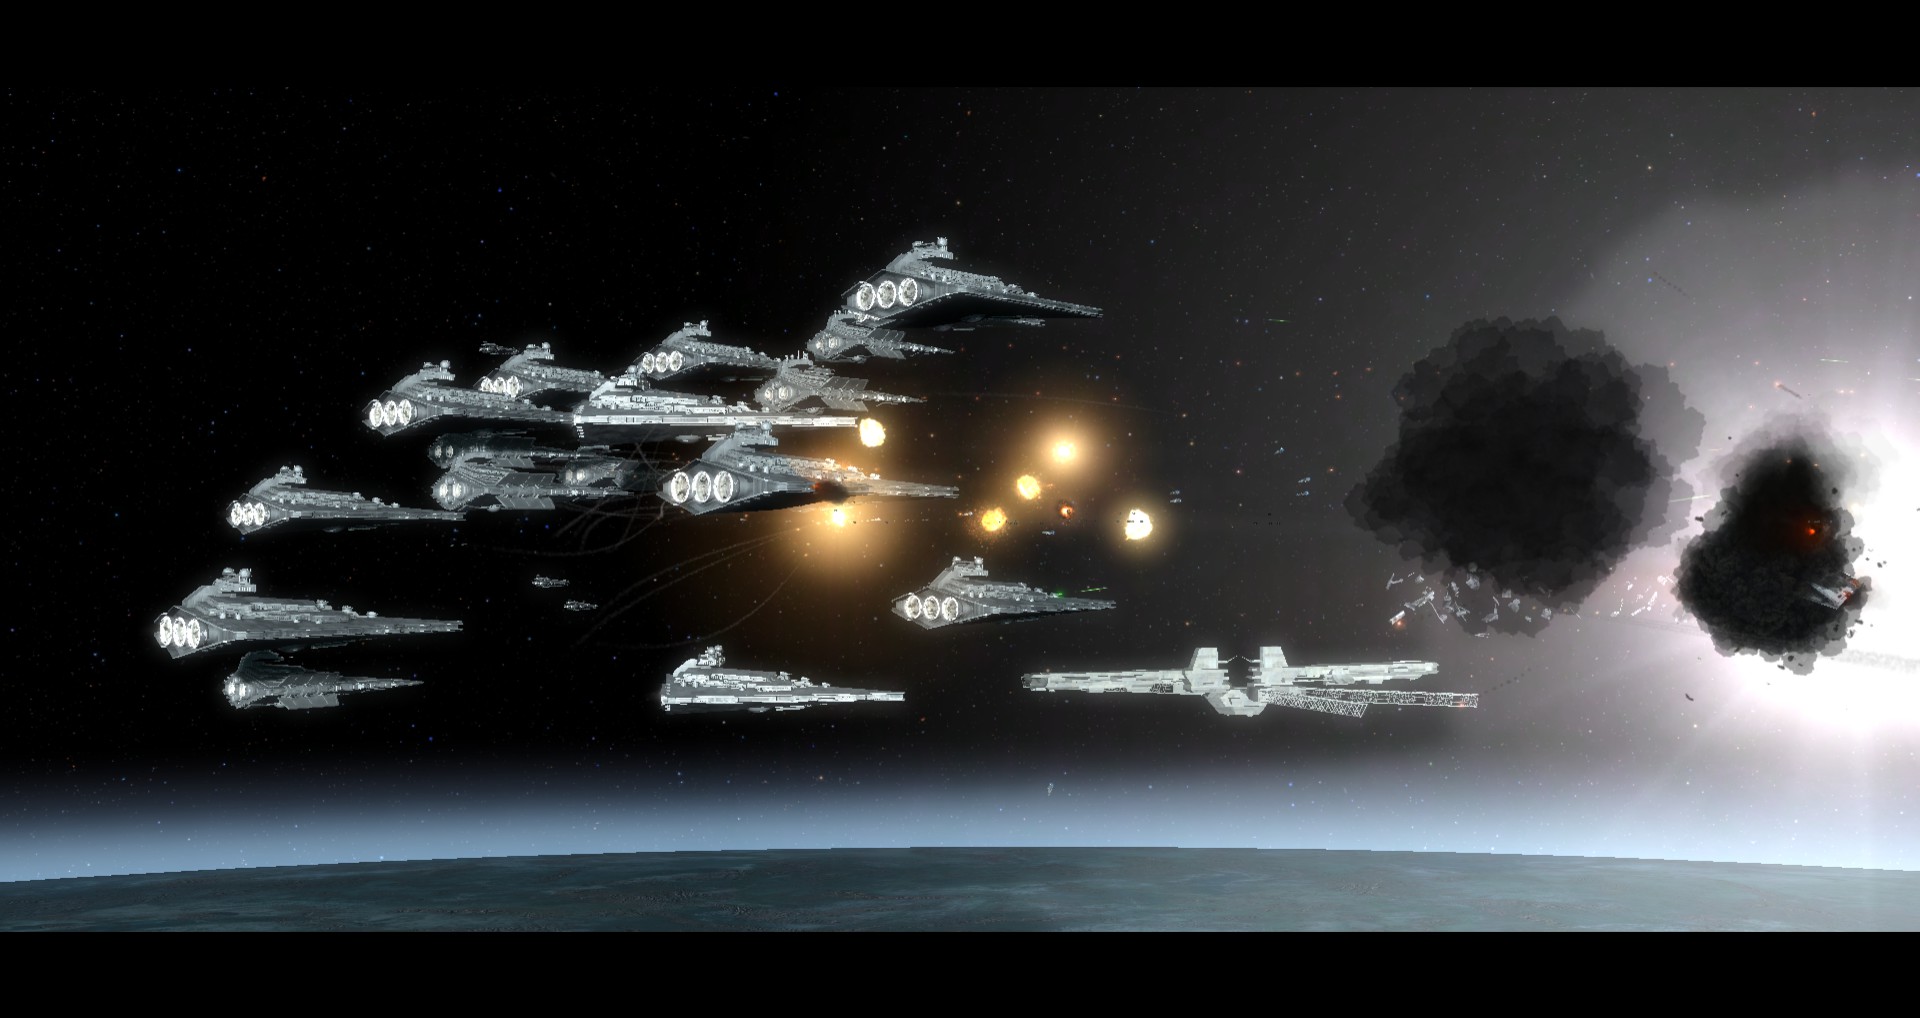 star wars empire at war remake download